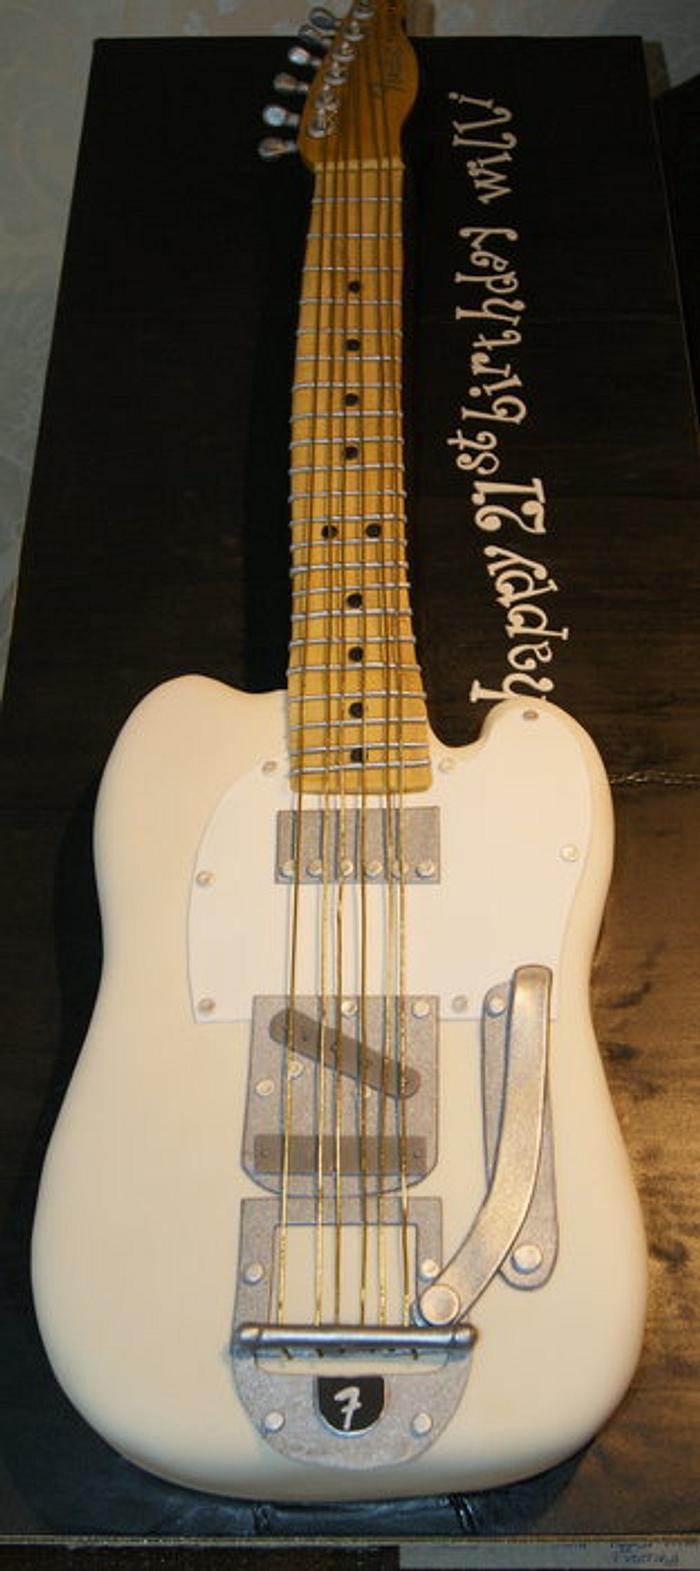 Fender Telecaster Guitar Cake